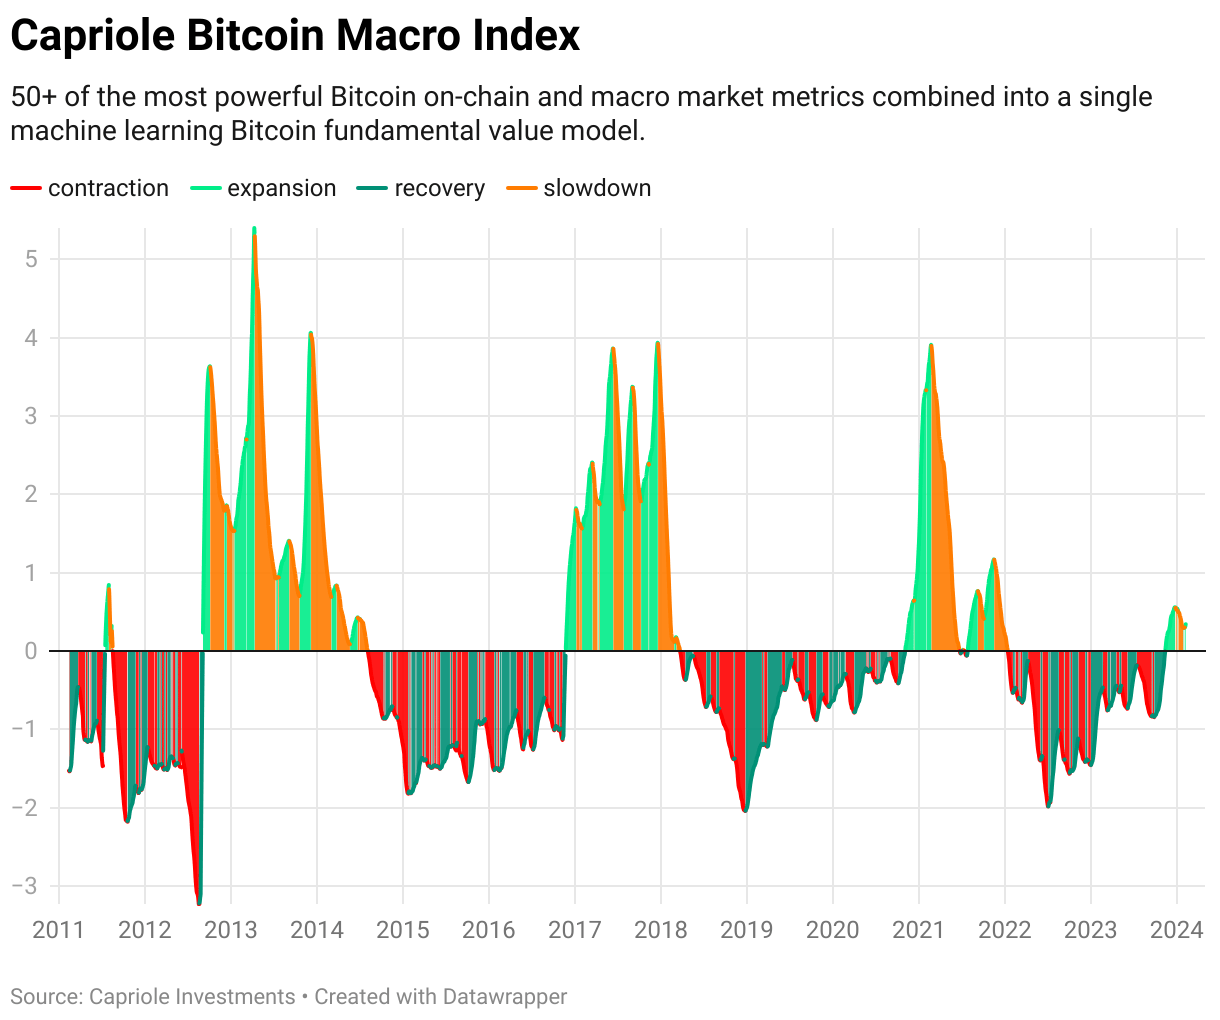 Capriole Bitcoin Macro Index